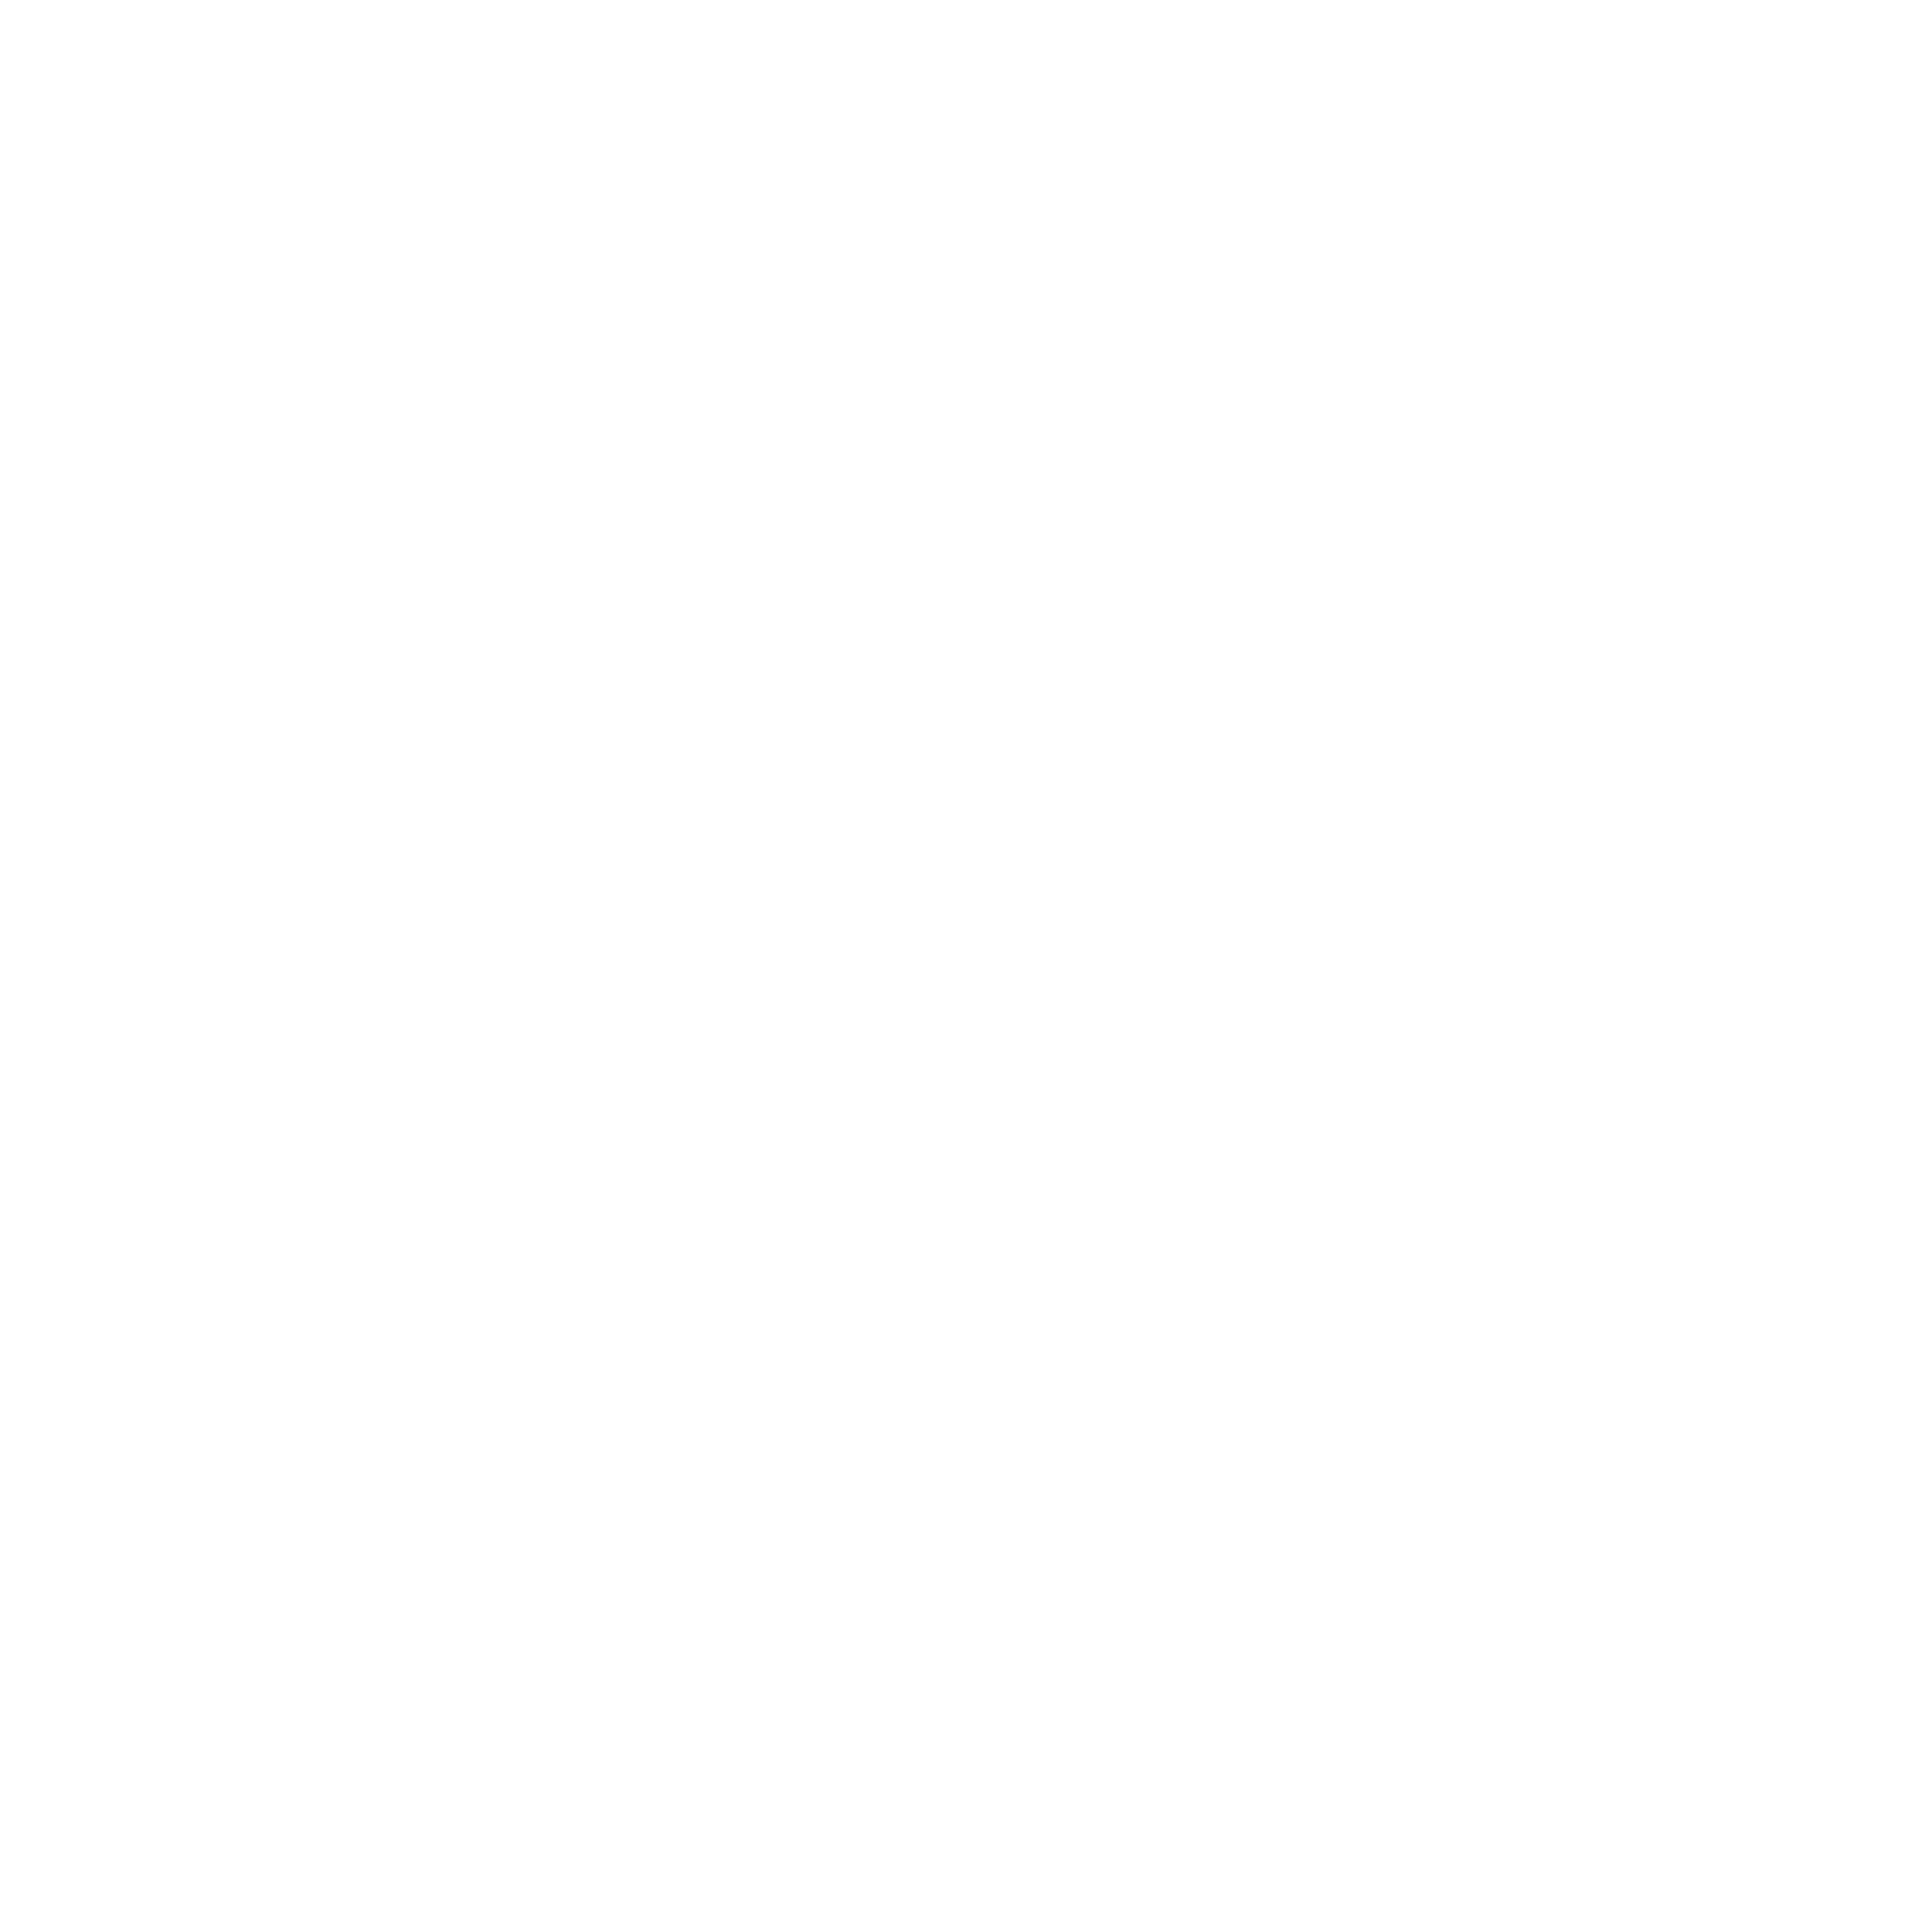 COAT Design Remodel - Community logo